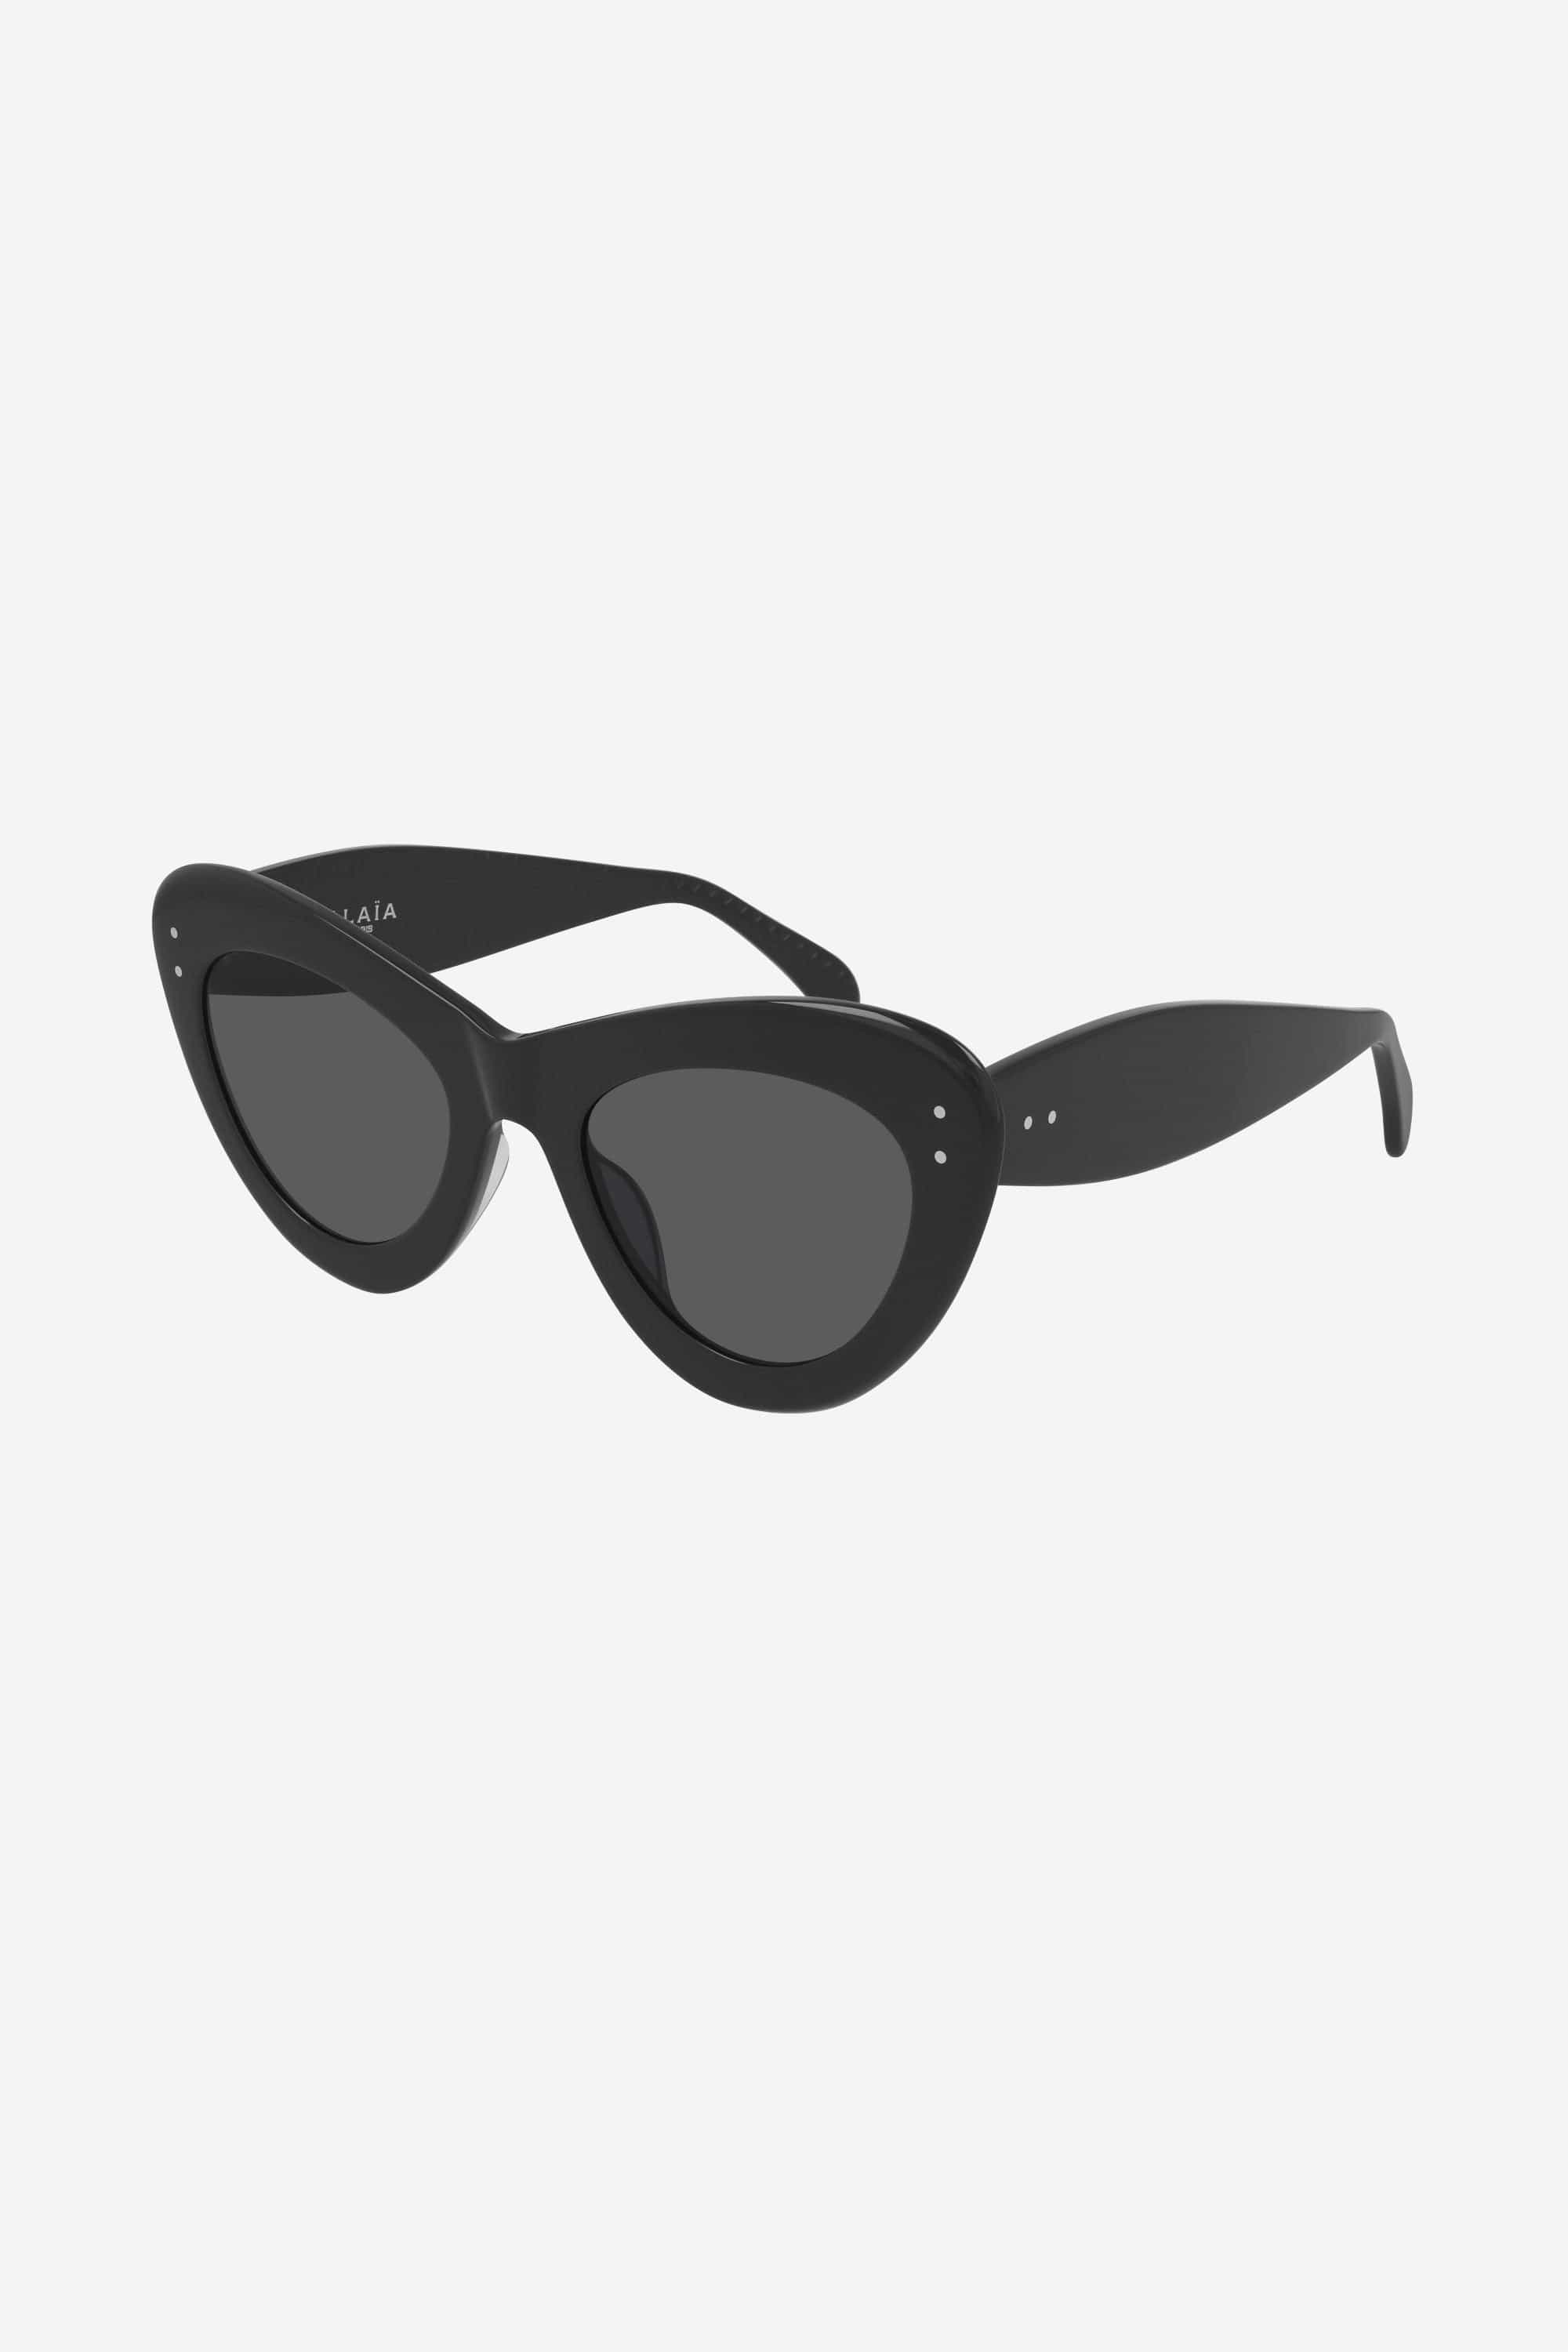 Alaia oversized cat-eye acetate sunglasses - Eyewear Club